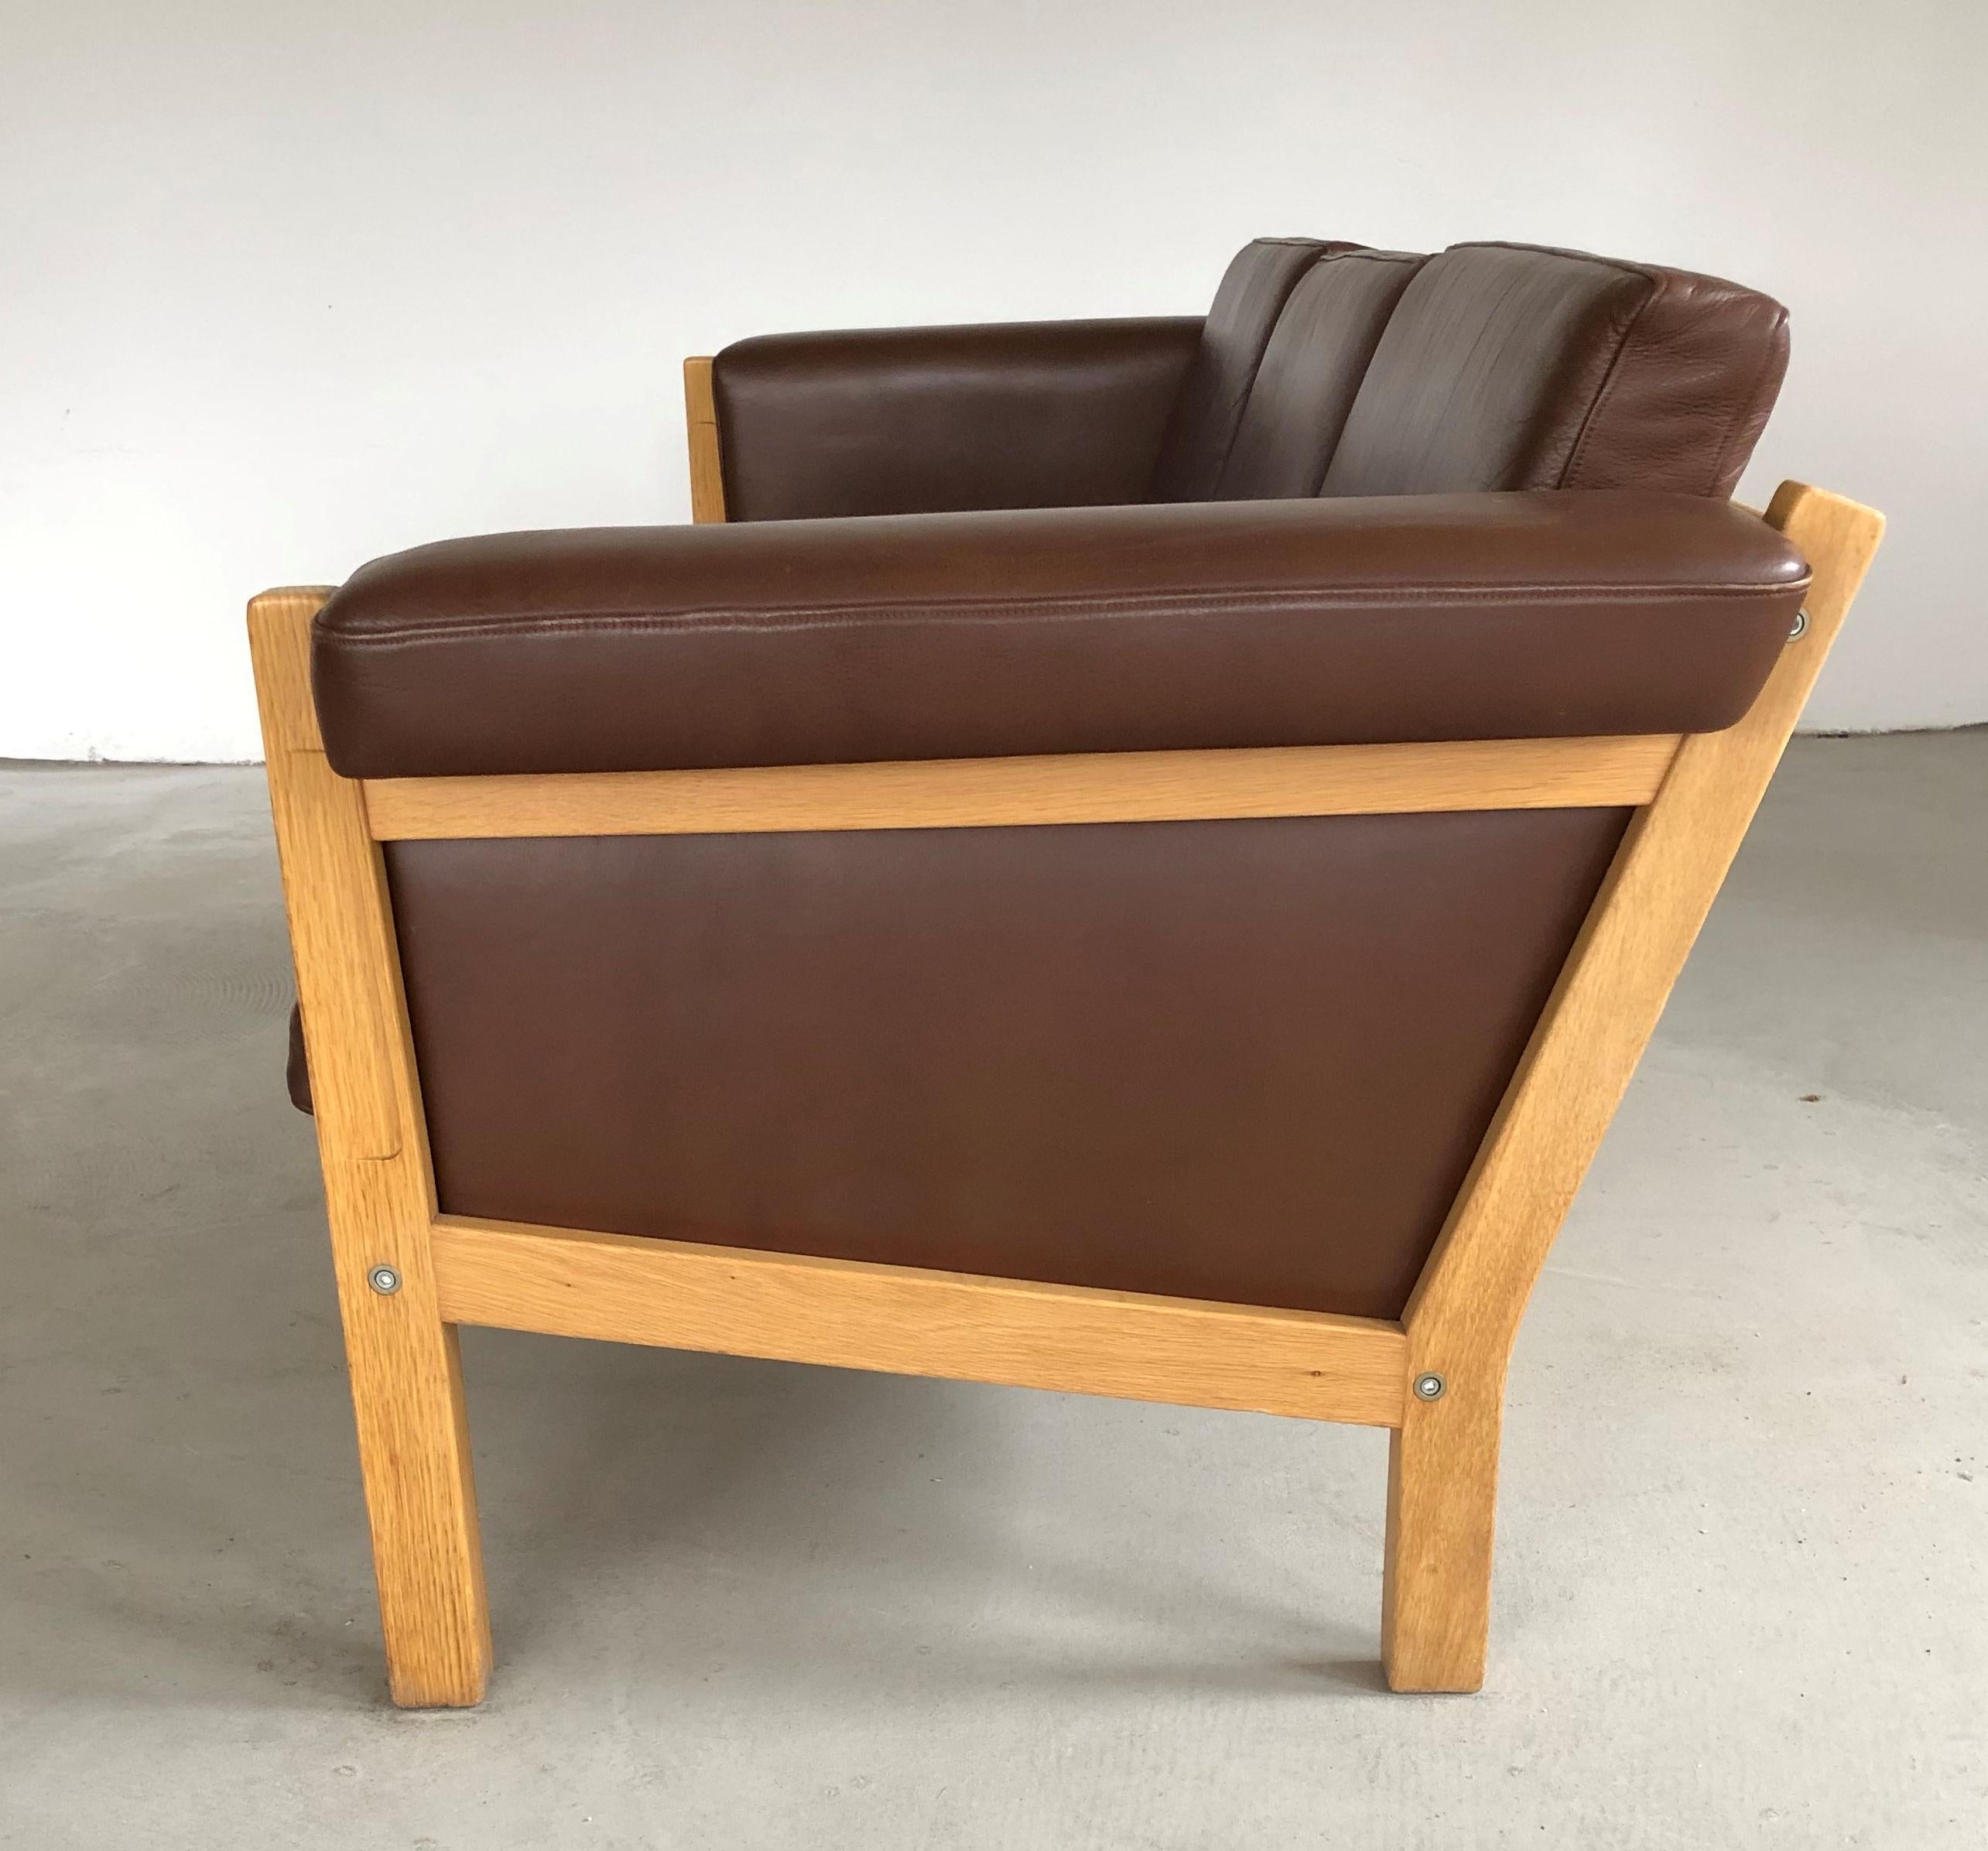 Adam Style 1960s Danish Hans J. Wegner Three-Seat Sofa in Oak and Brown Leather by GETAMA For Sale